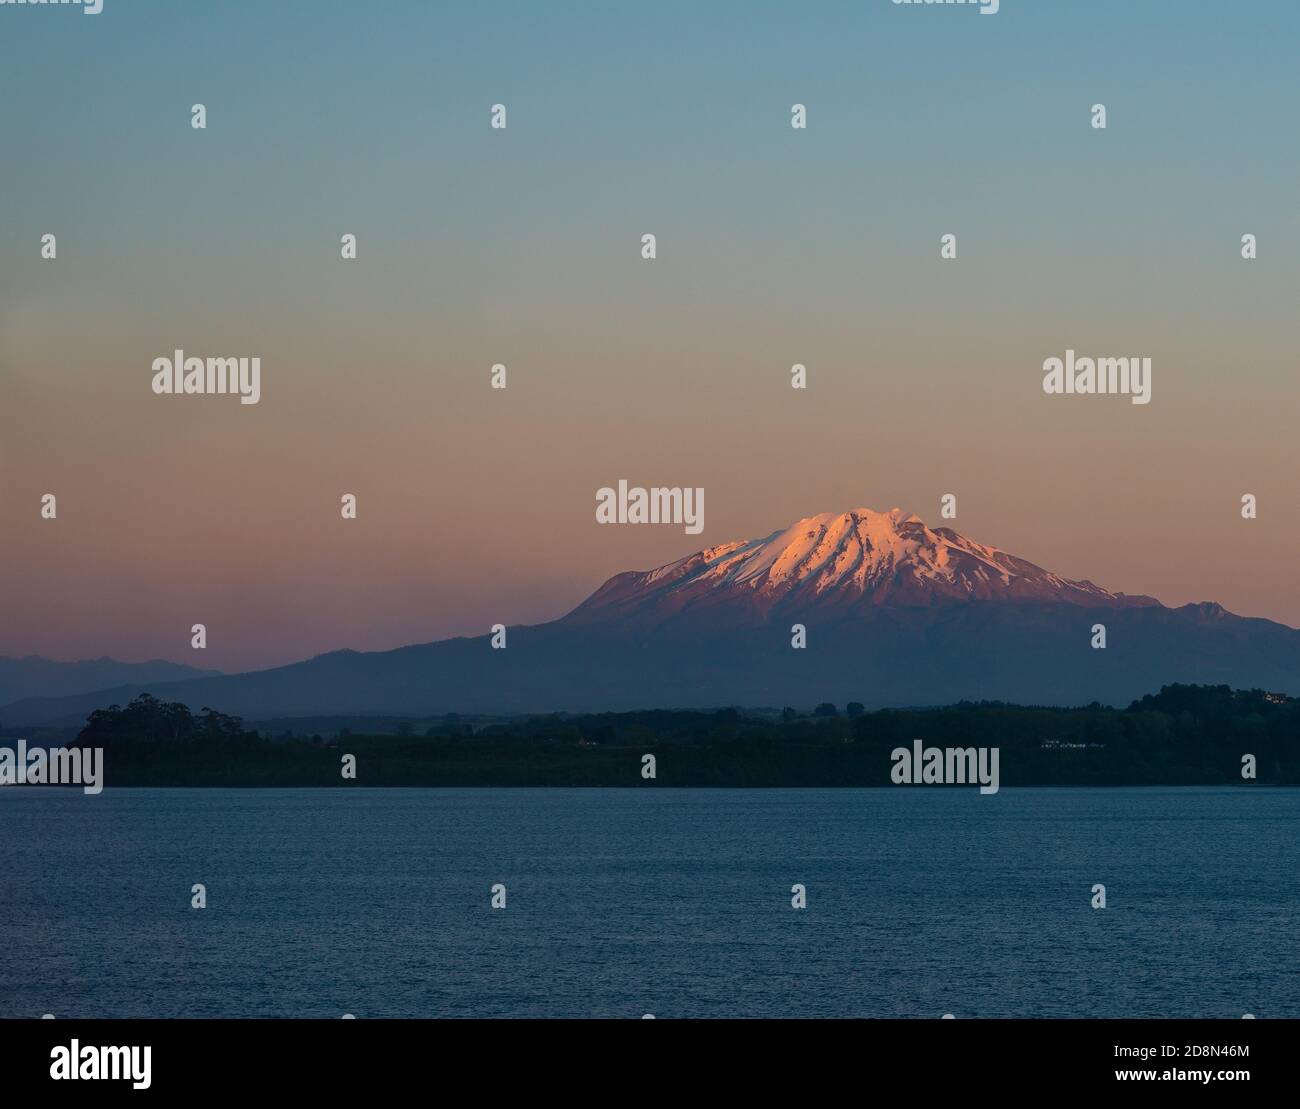 Vulcano Calbuco illuminato al tramonto dal lago Llanquihue, Puerto Varas, Cile. Foto Stock